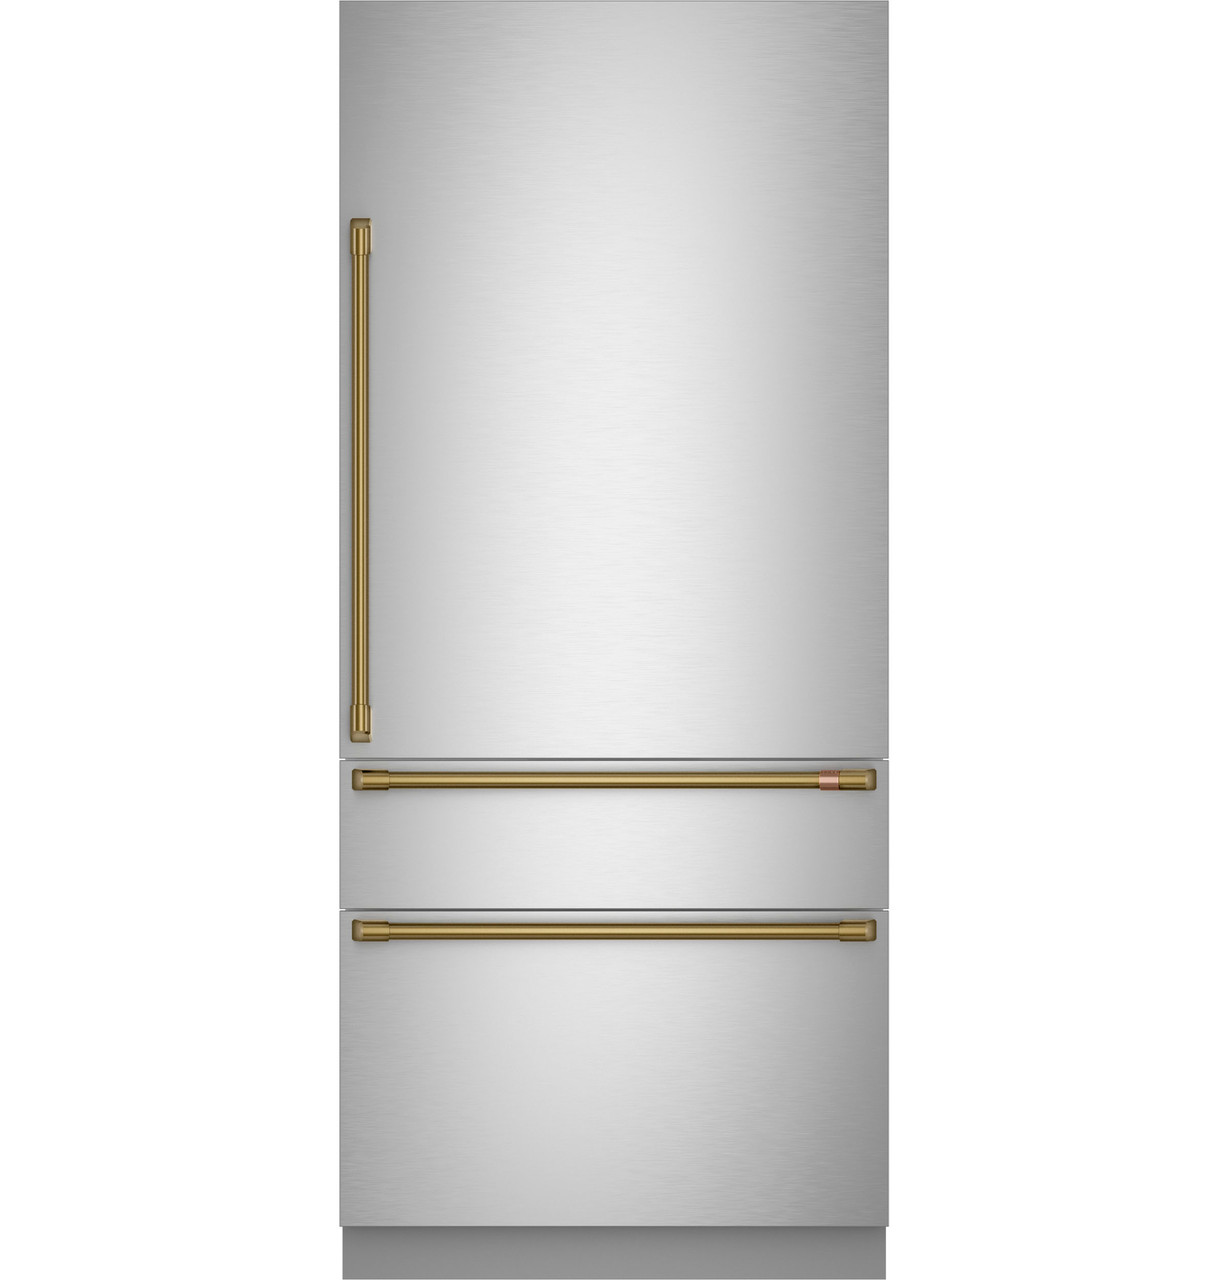 Quick & Cheap Freezer / Refrigerator Alarm 